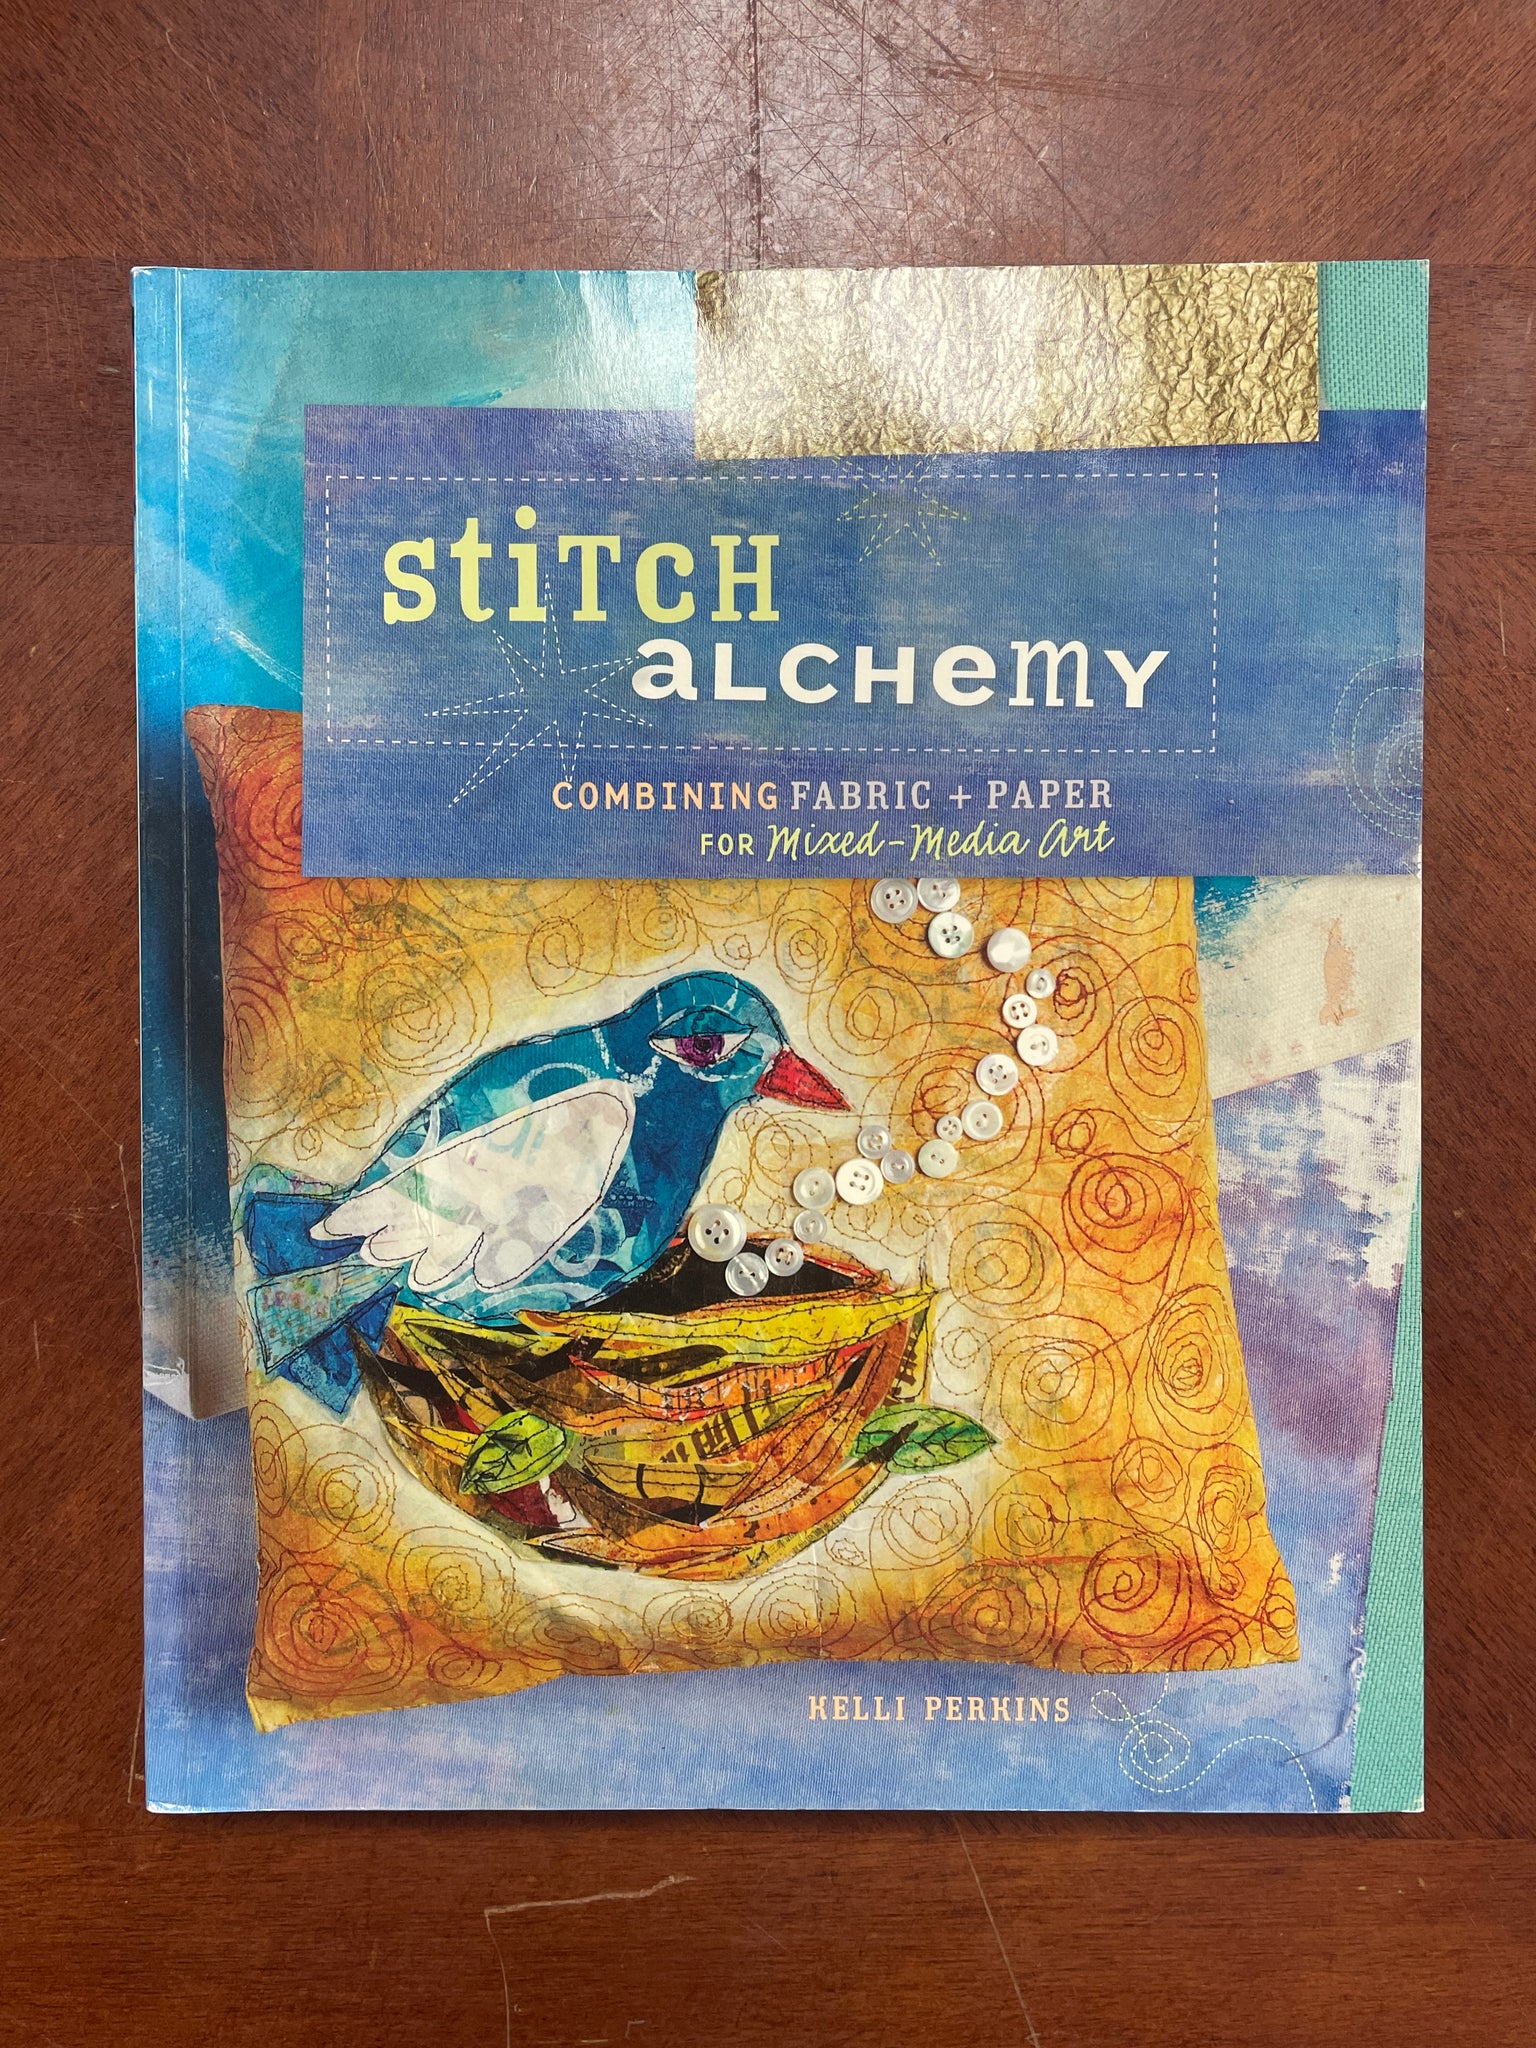 2009 Mixed-Media Art Book - "Stitch Alchemy"